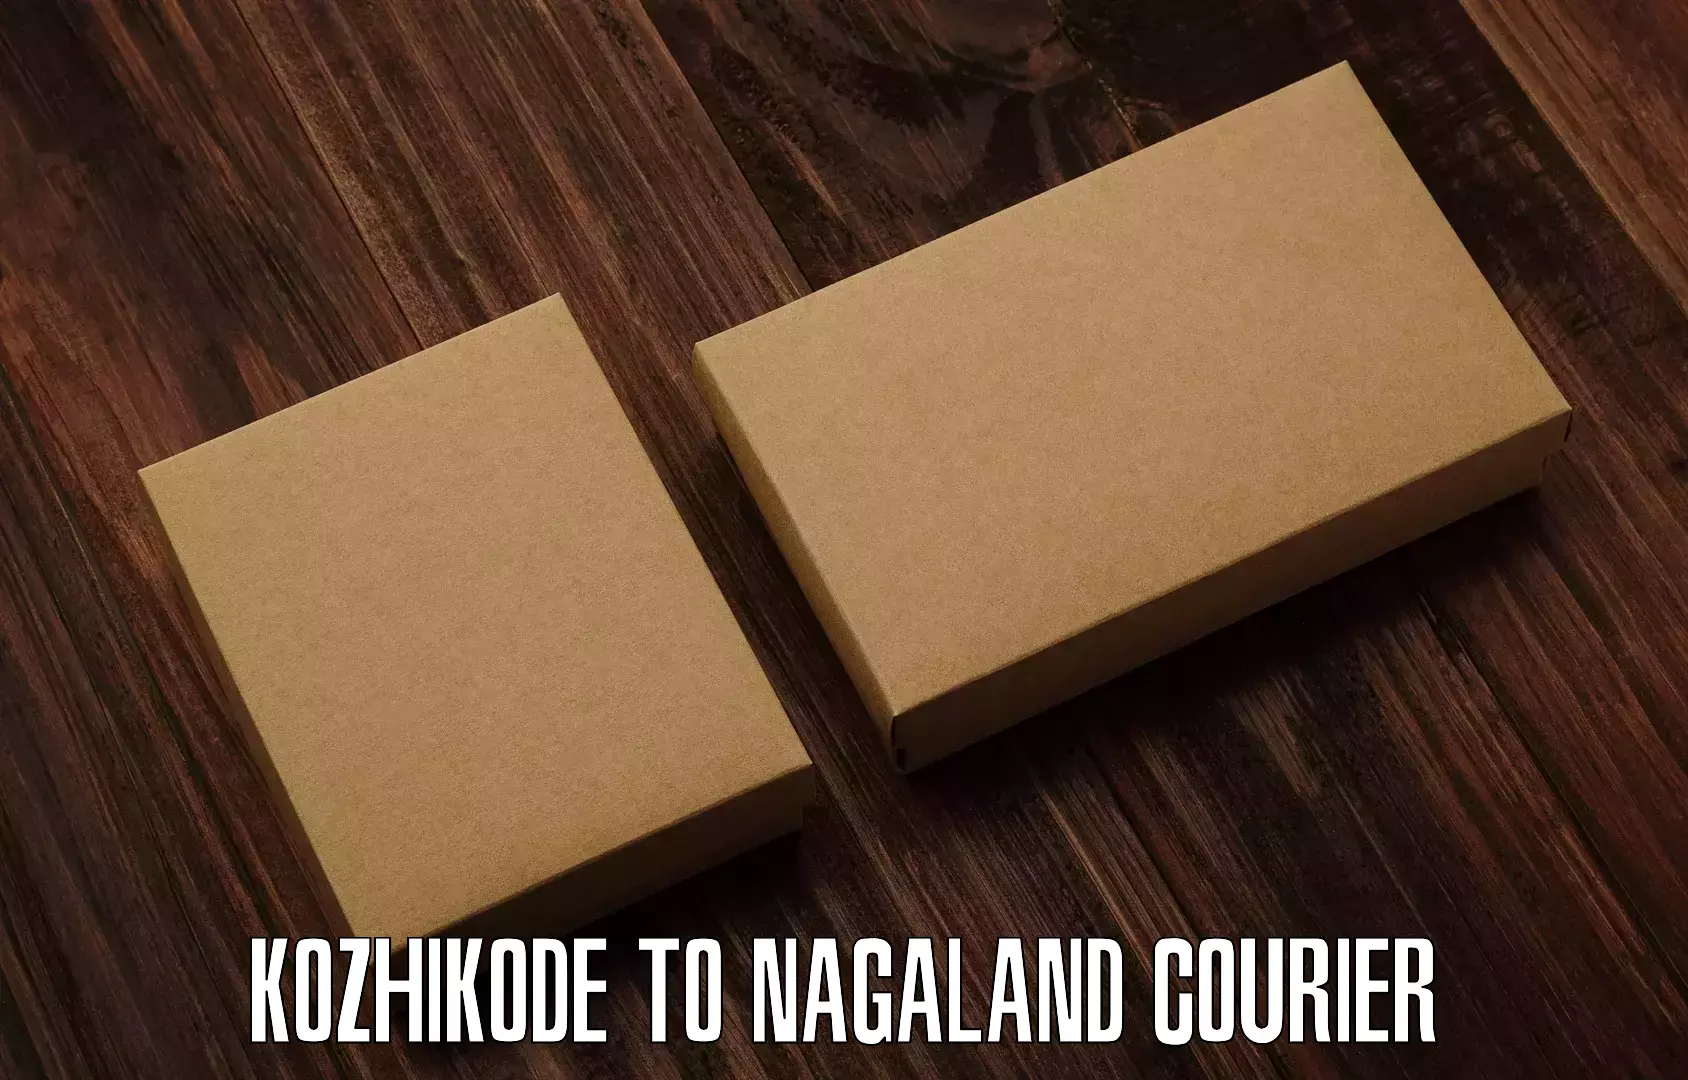 User-friendly courier app Kozhikode to Mon